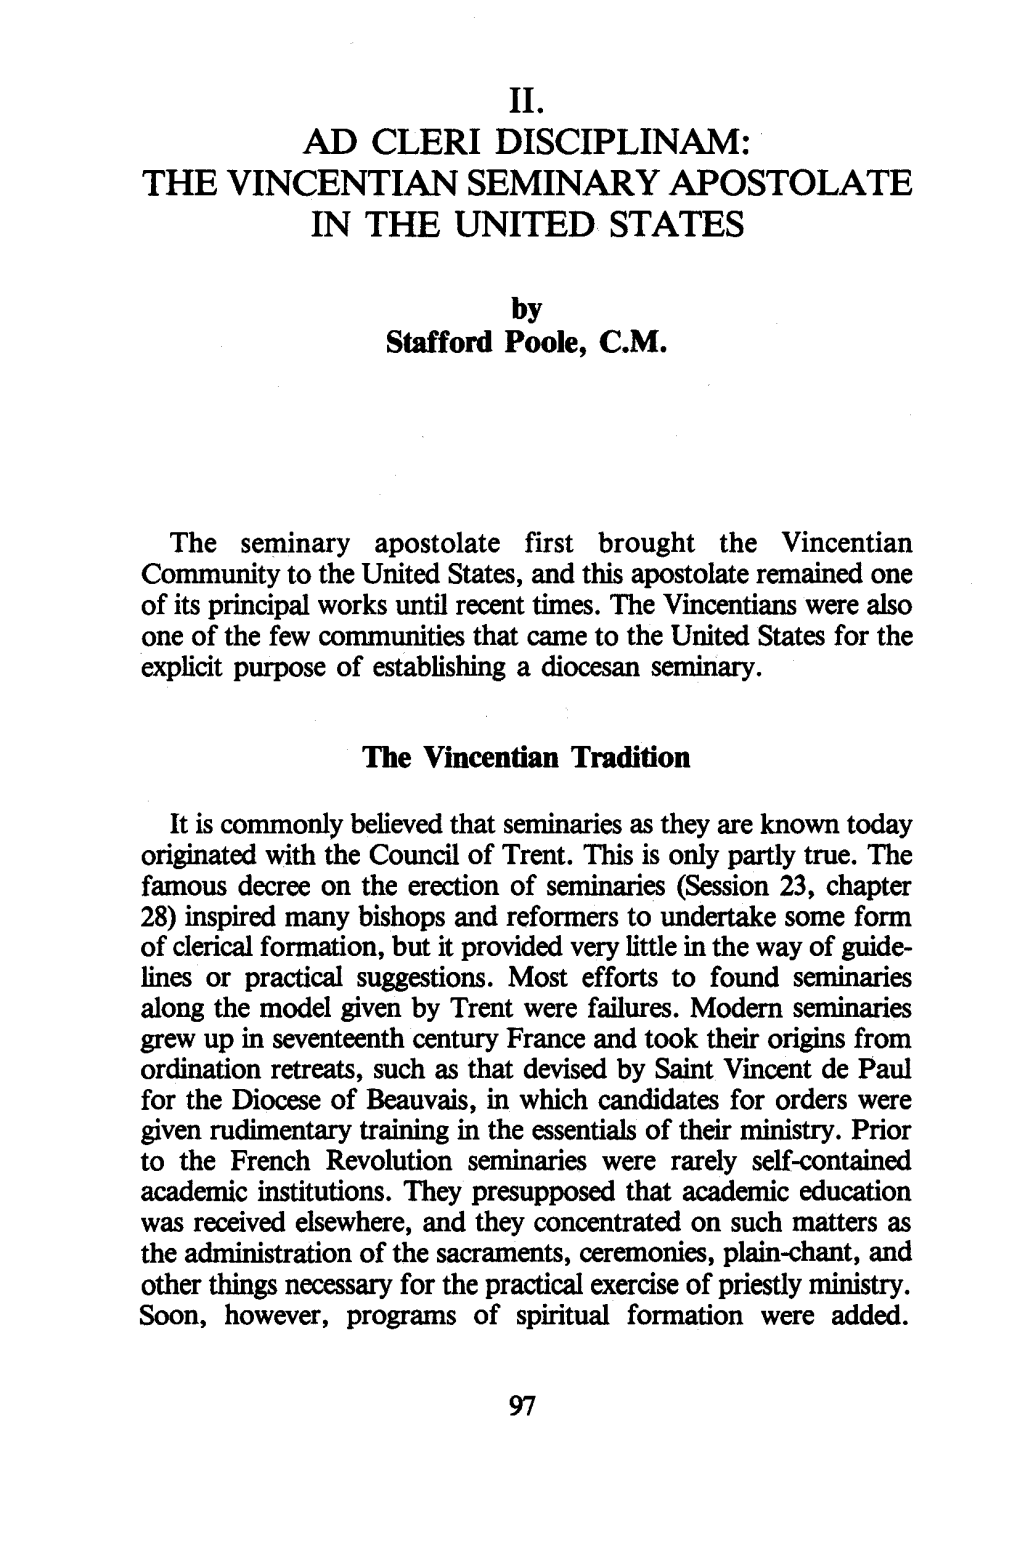 Ad Cleri Disciplinam: the Vincentian Seminary Apostolate in the United States